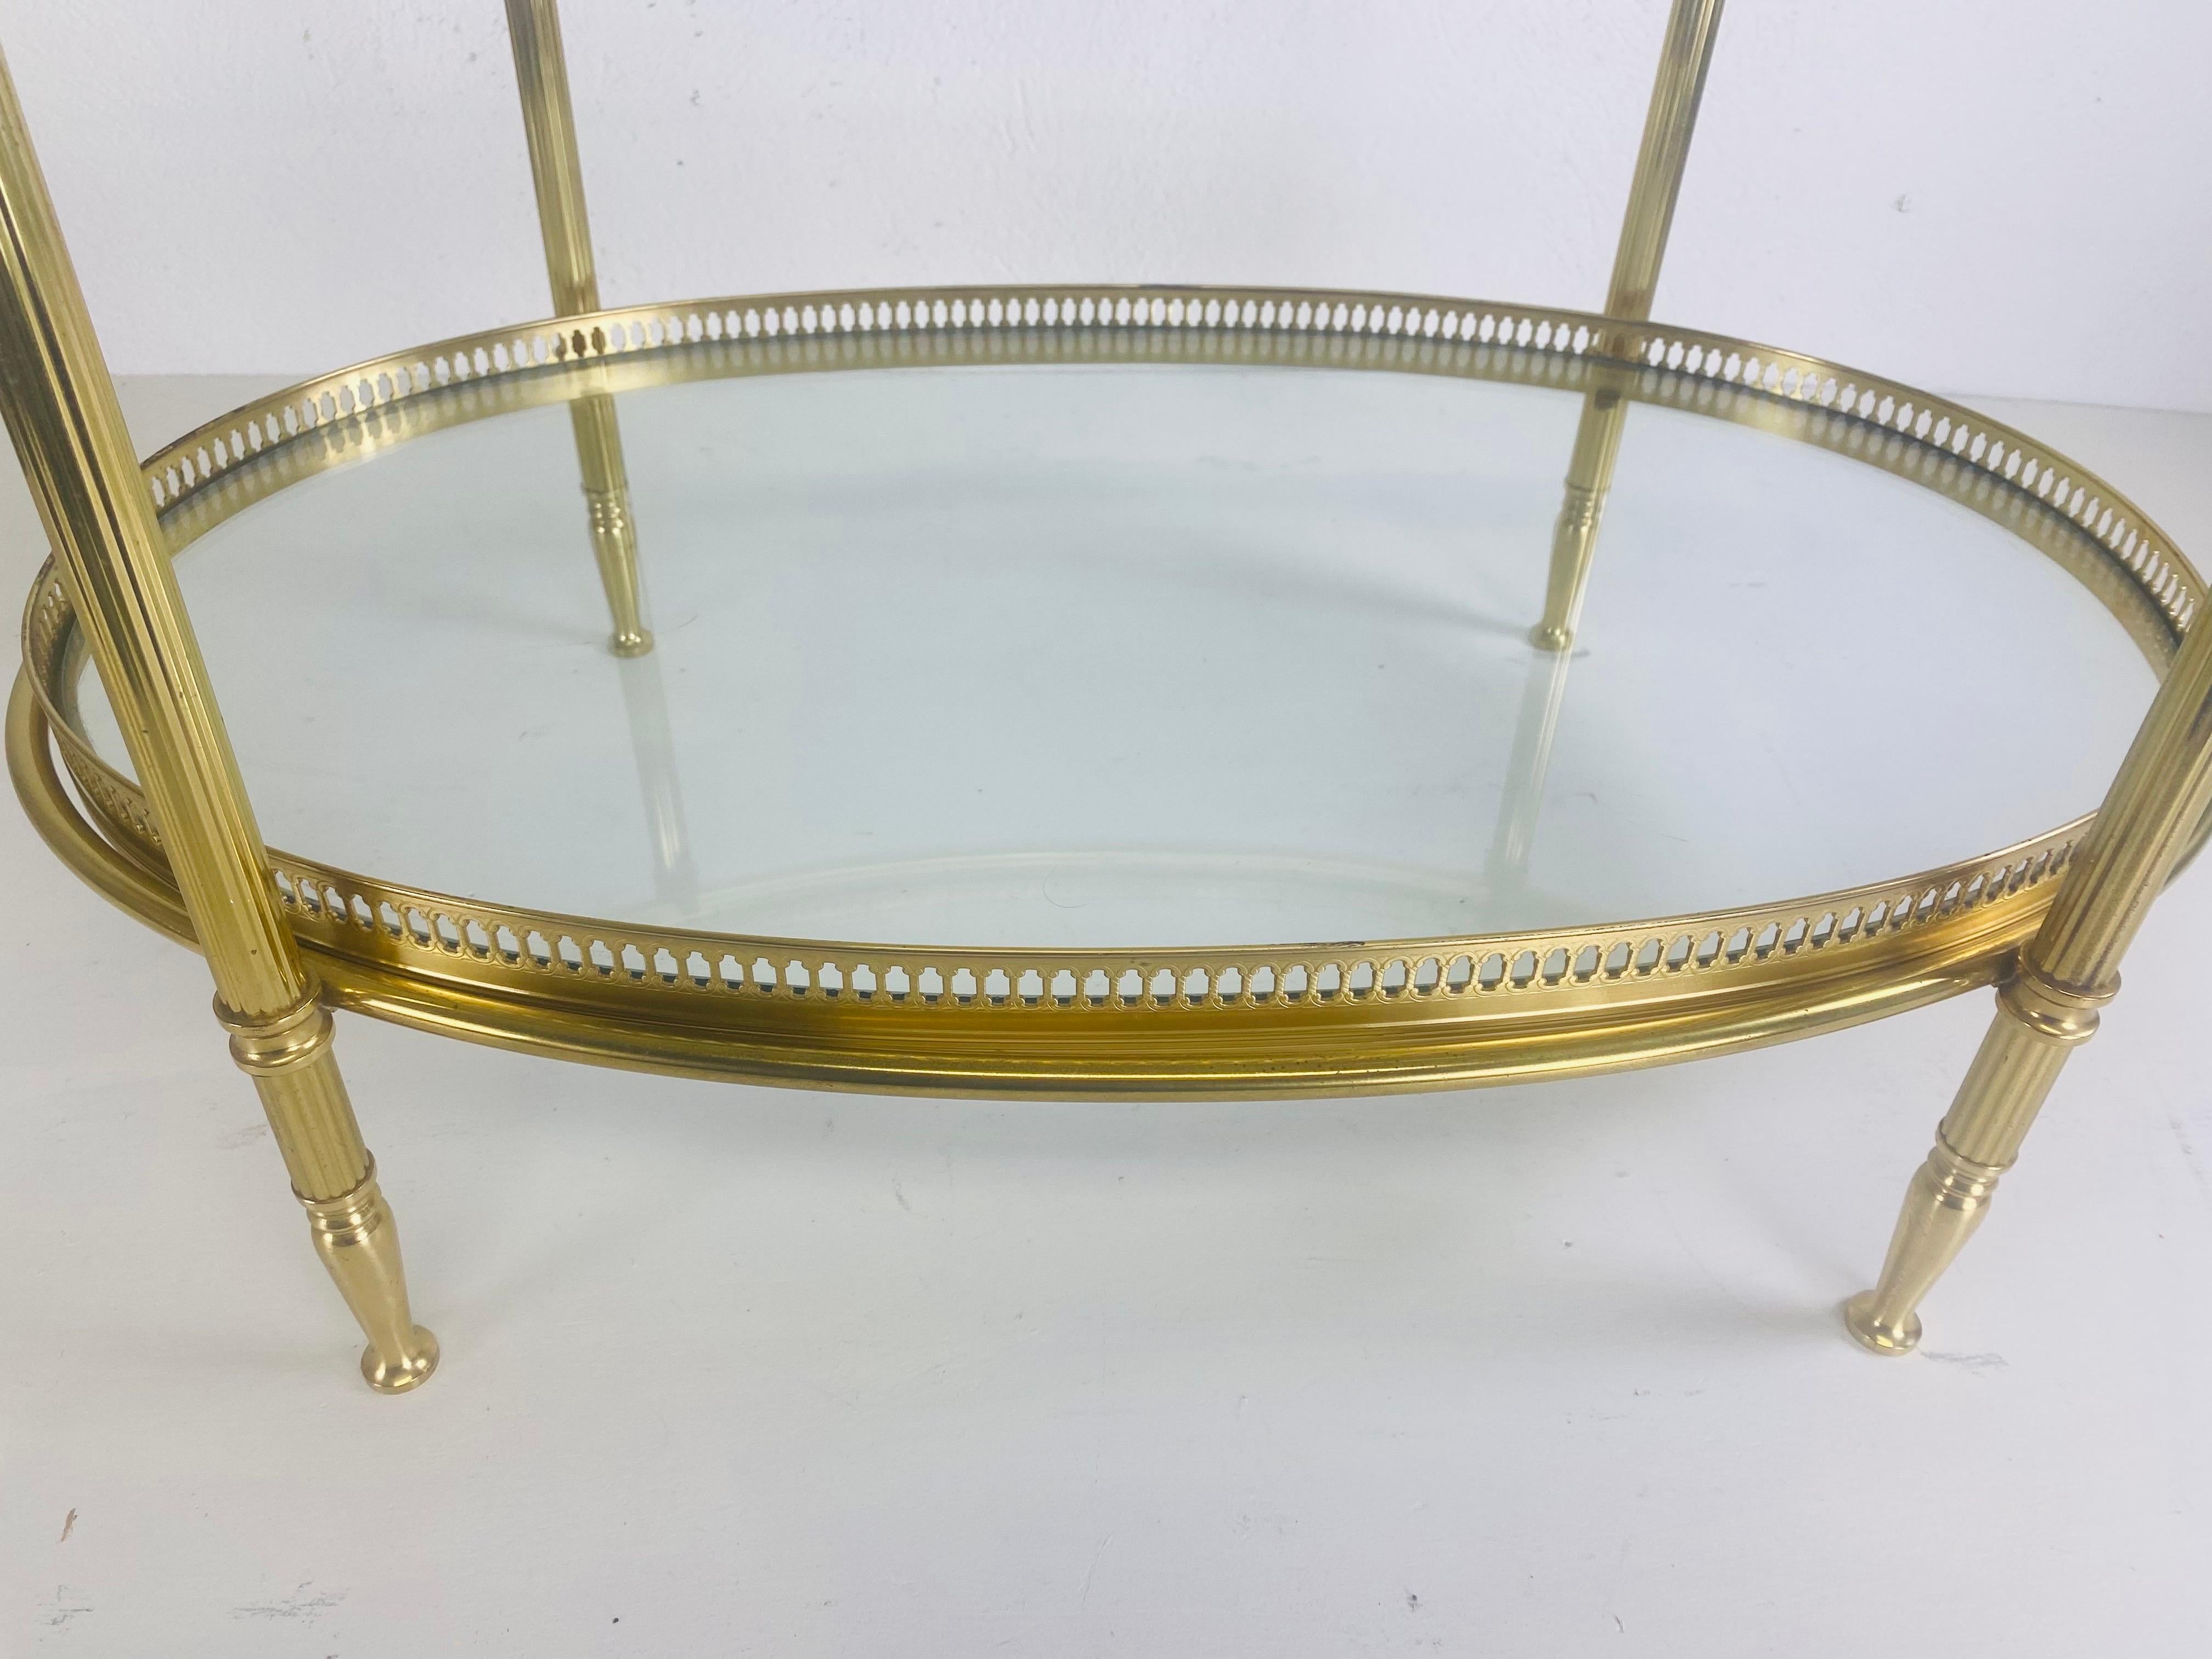 Regency Handsome mid century solid brass Italian tray table after Maison Jansen